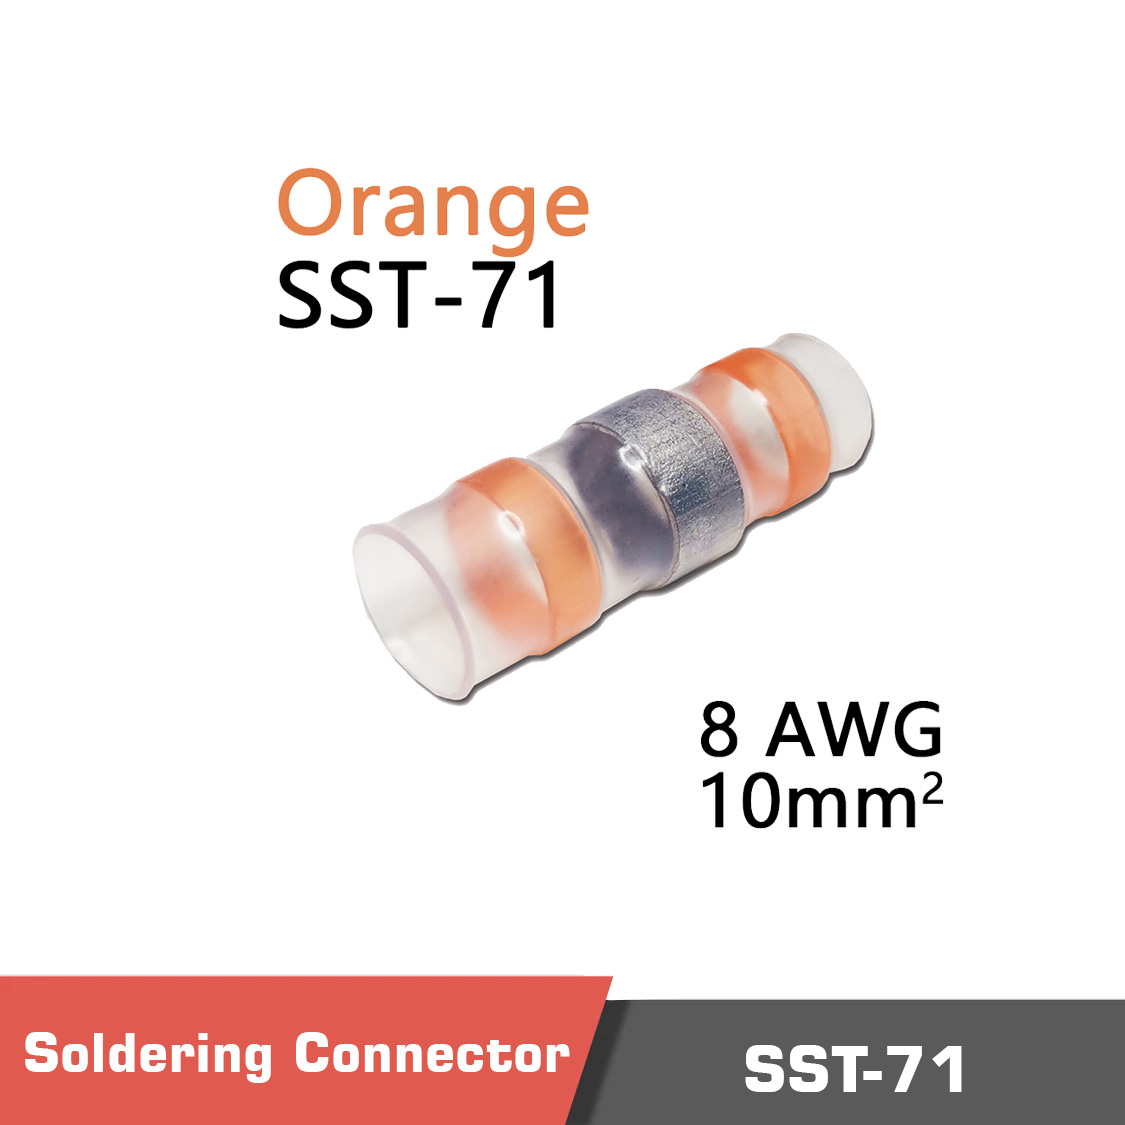 Sst 71 - sst-61,sst-61 soldering connector,soldering connector - motionew - 14